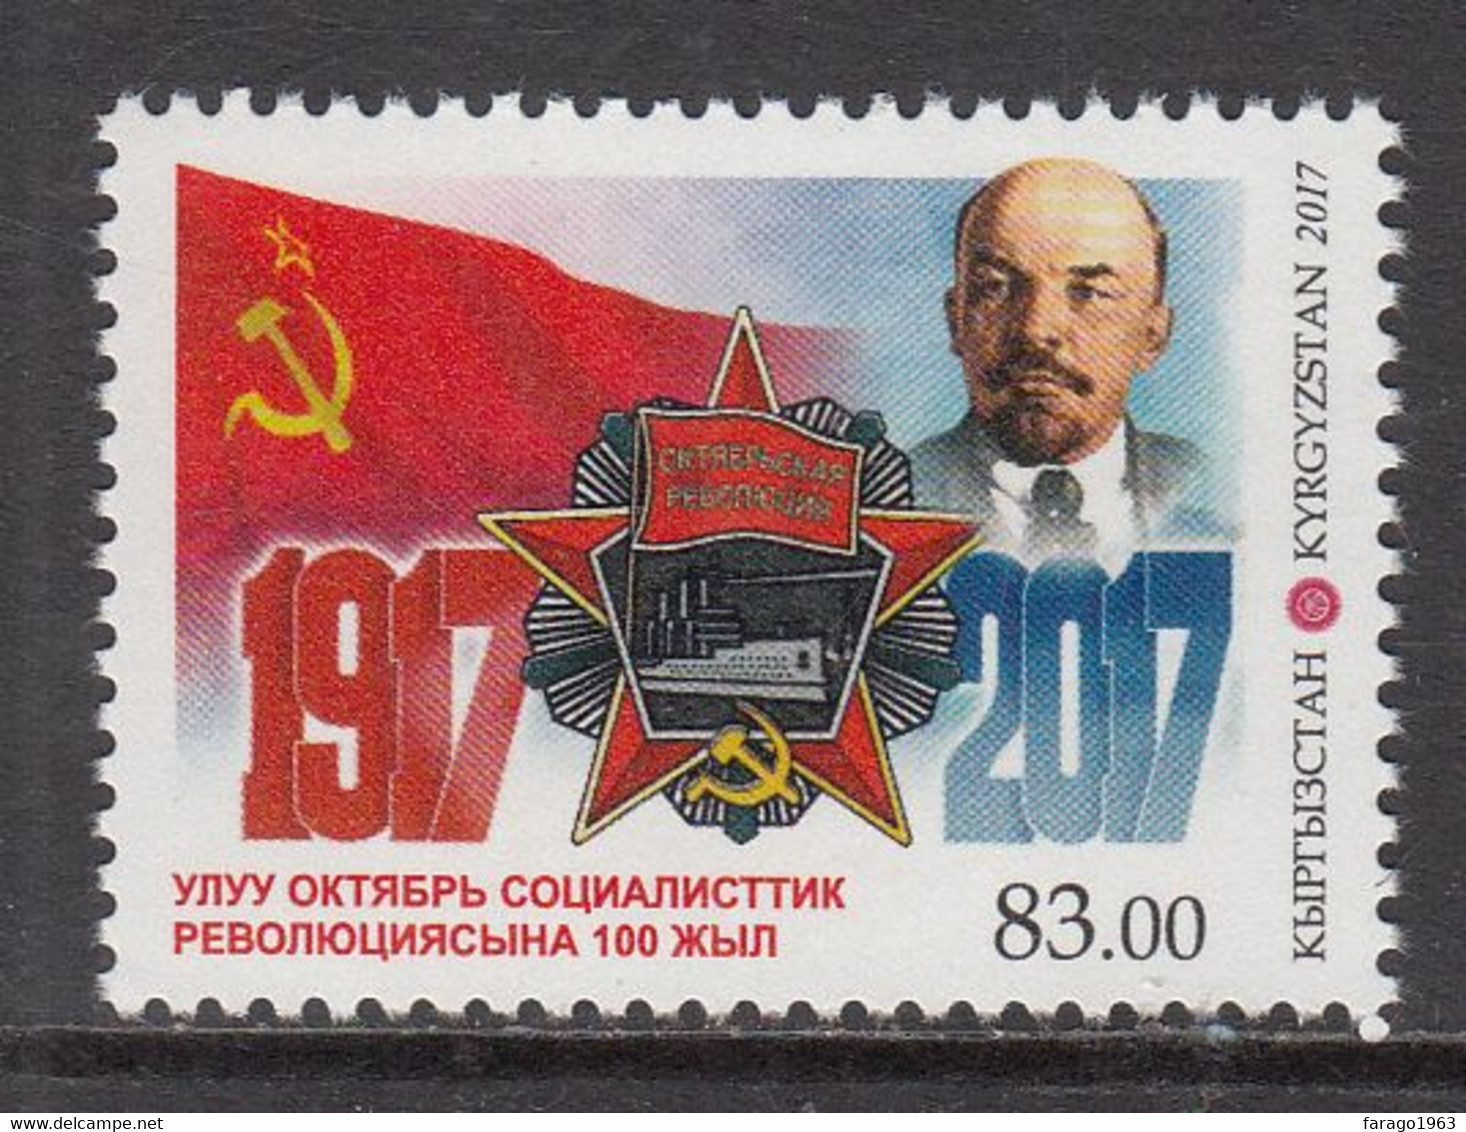 2017 Kyrgyzstan October Revolution Lenin Complete Set Of 1  MNH - Kirgisistan